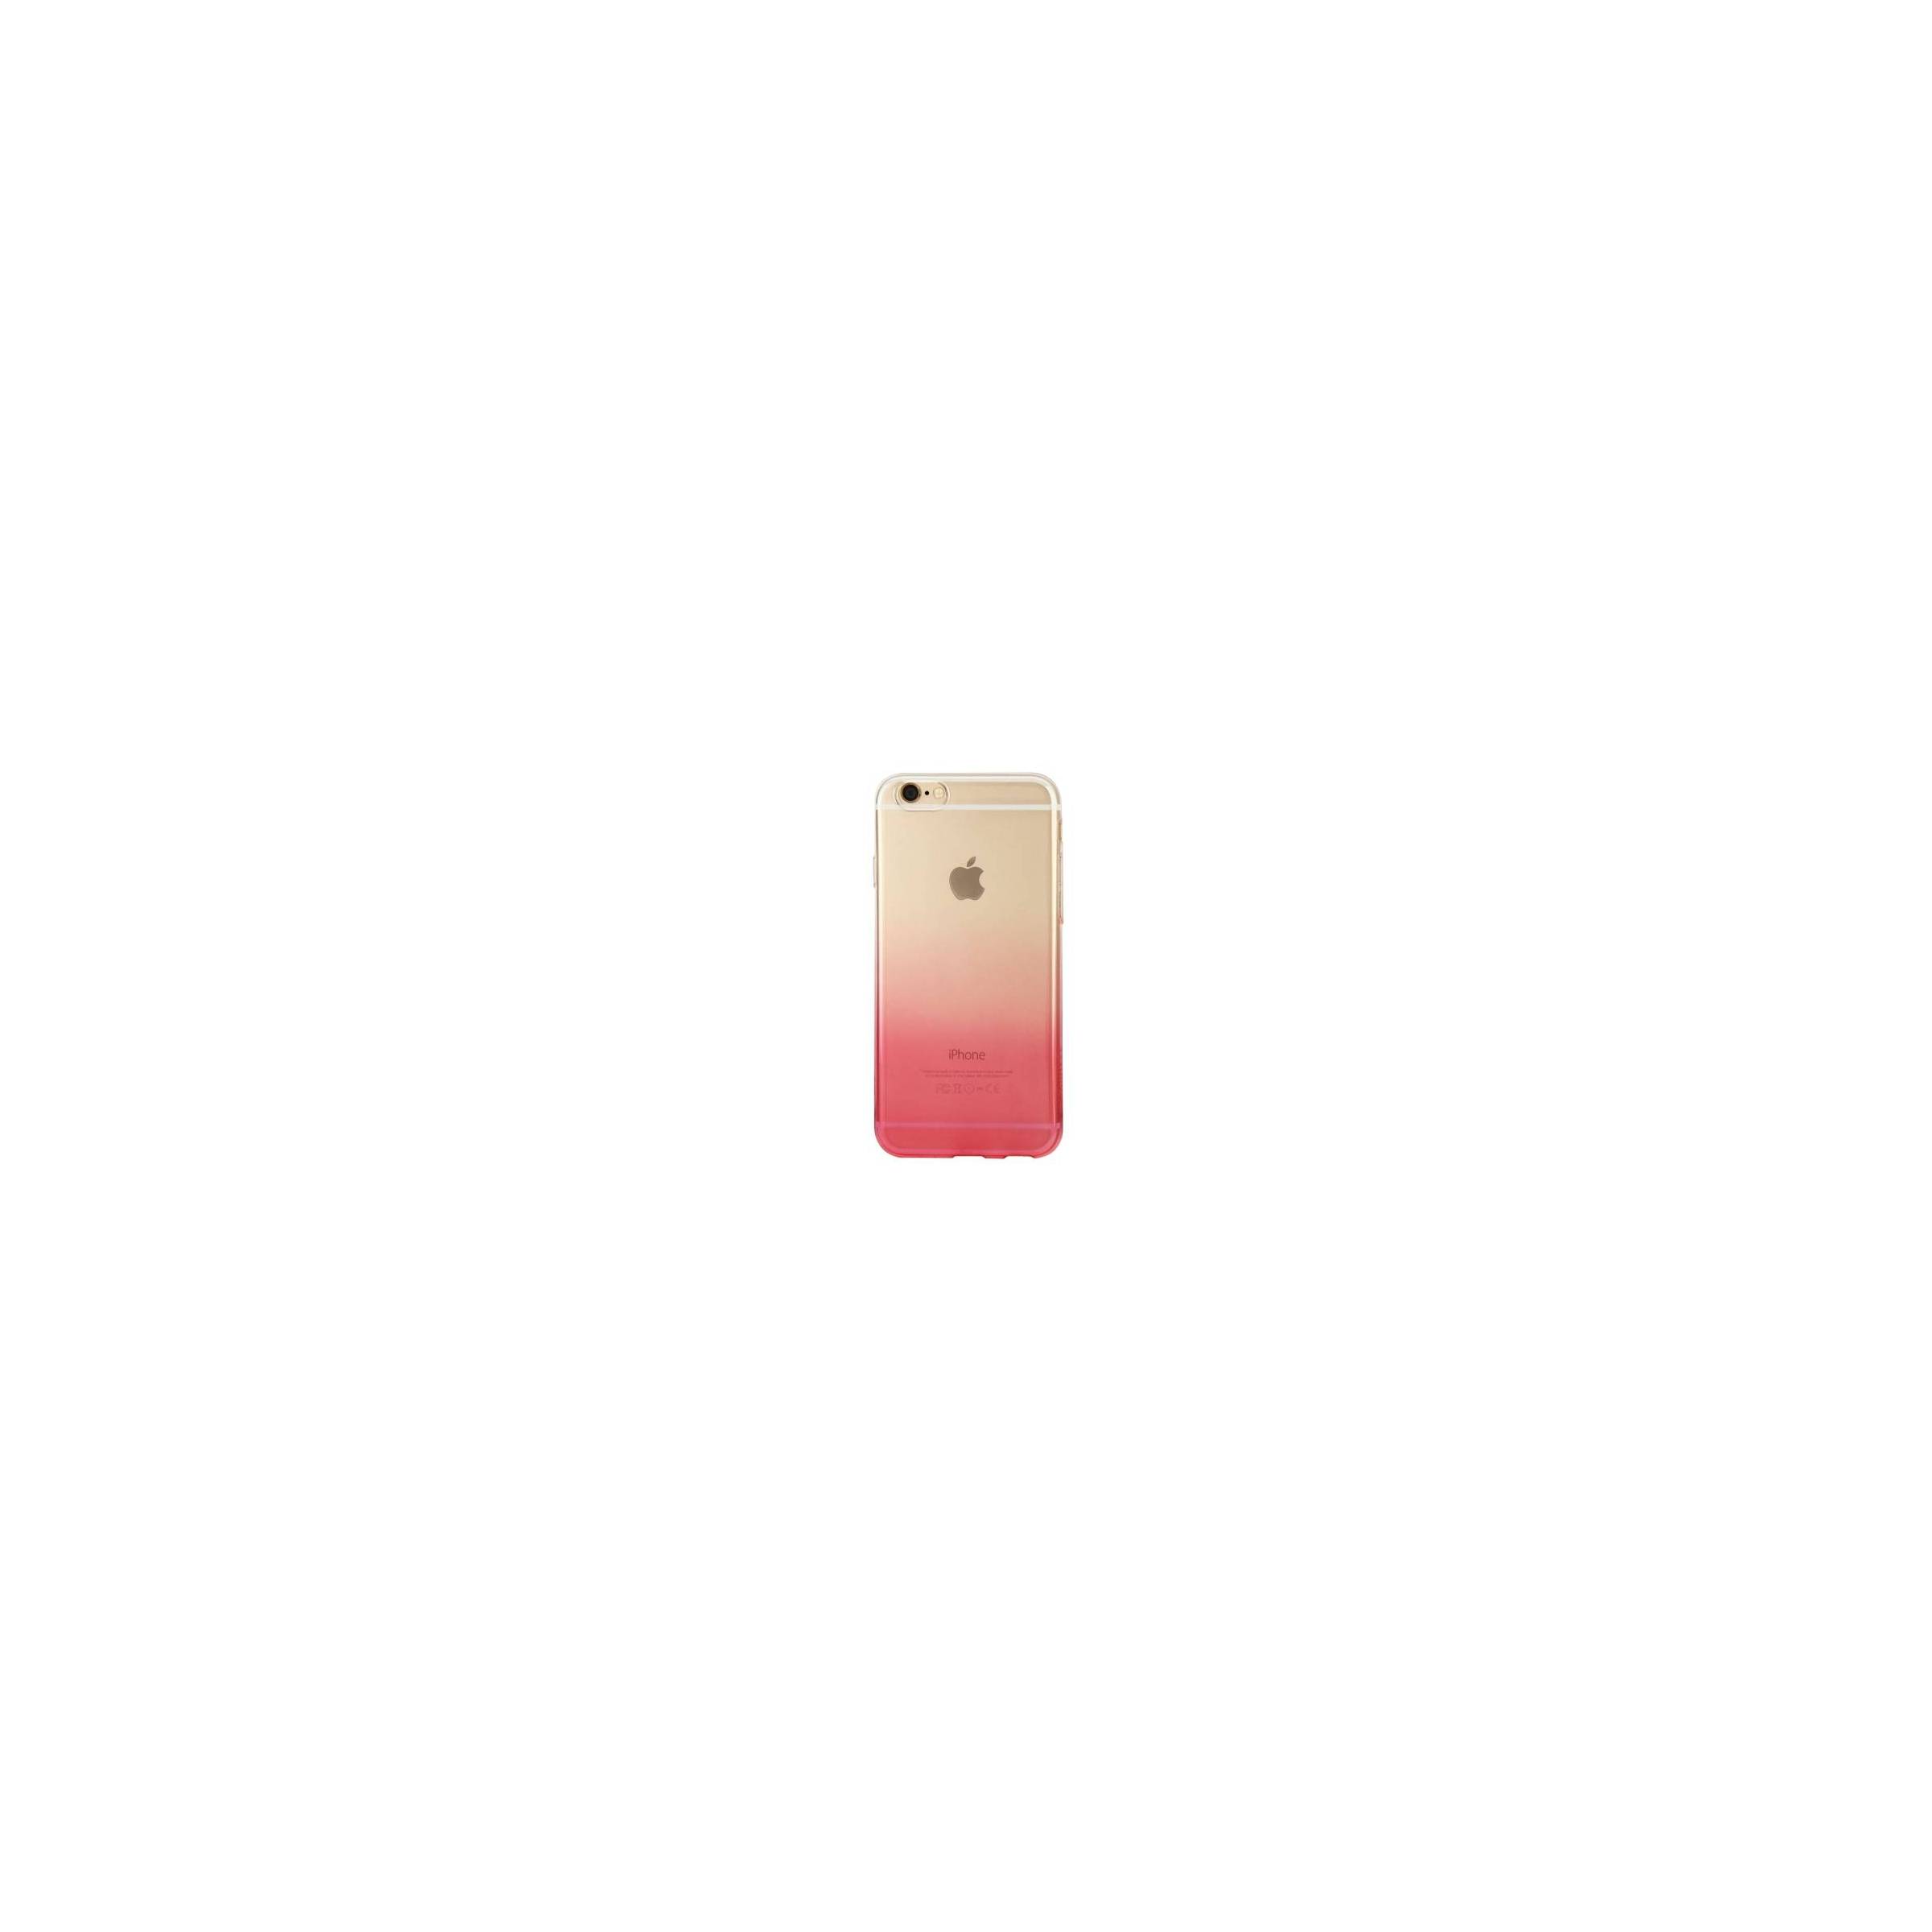 Bilde av Slim Silikone Solopgang Cover Til Iphone 6/6s, Iphone Iphone 6 Plus/ 6s Plus, Farge Rosa